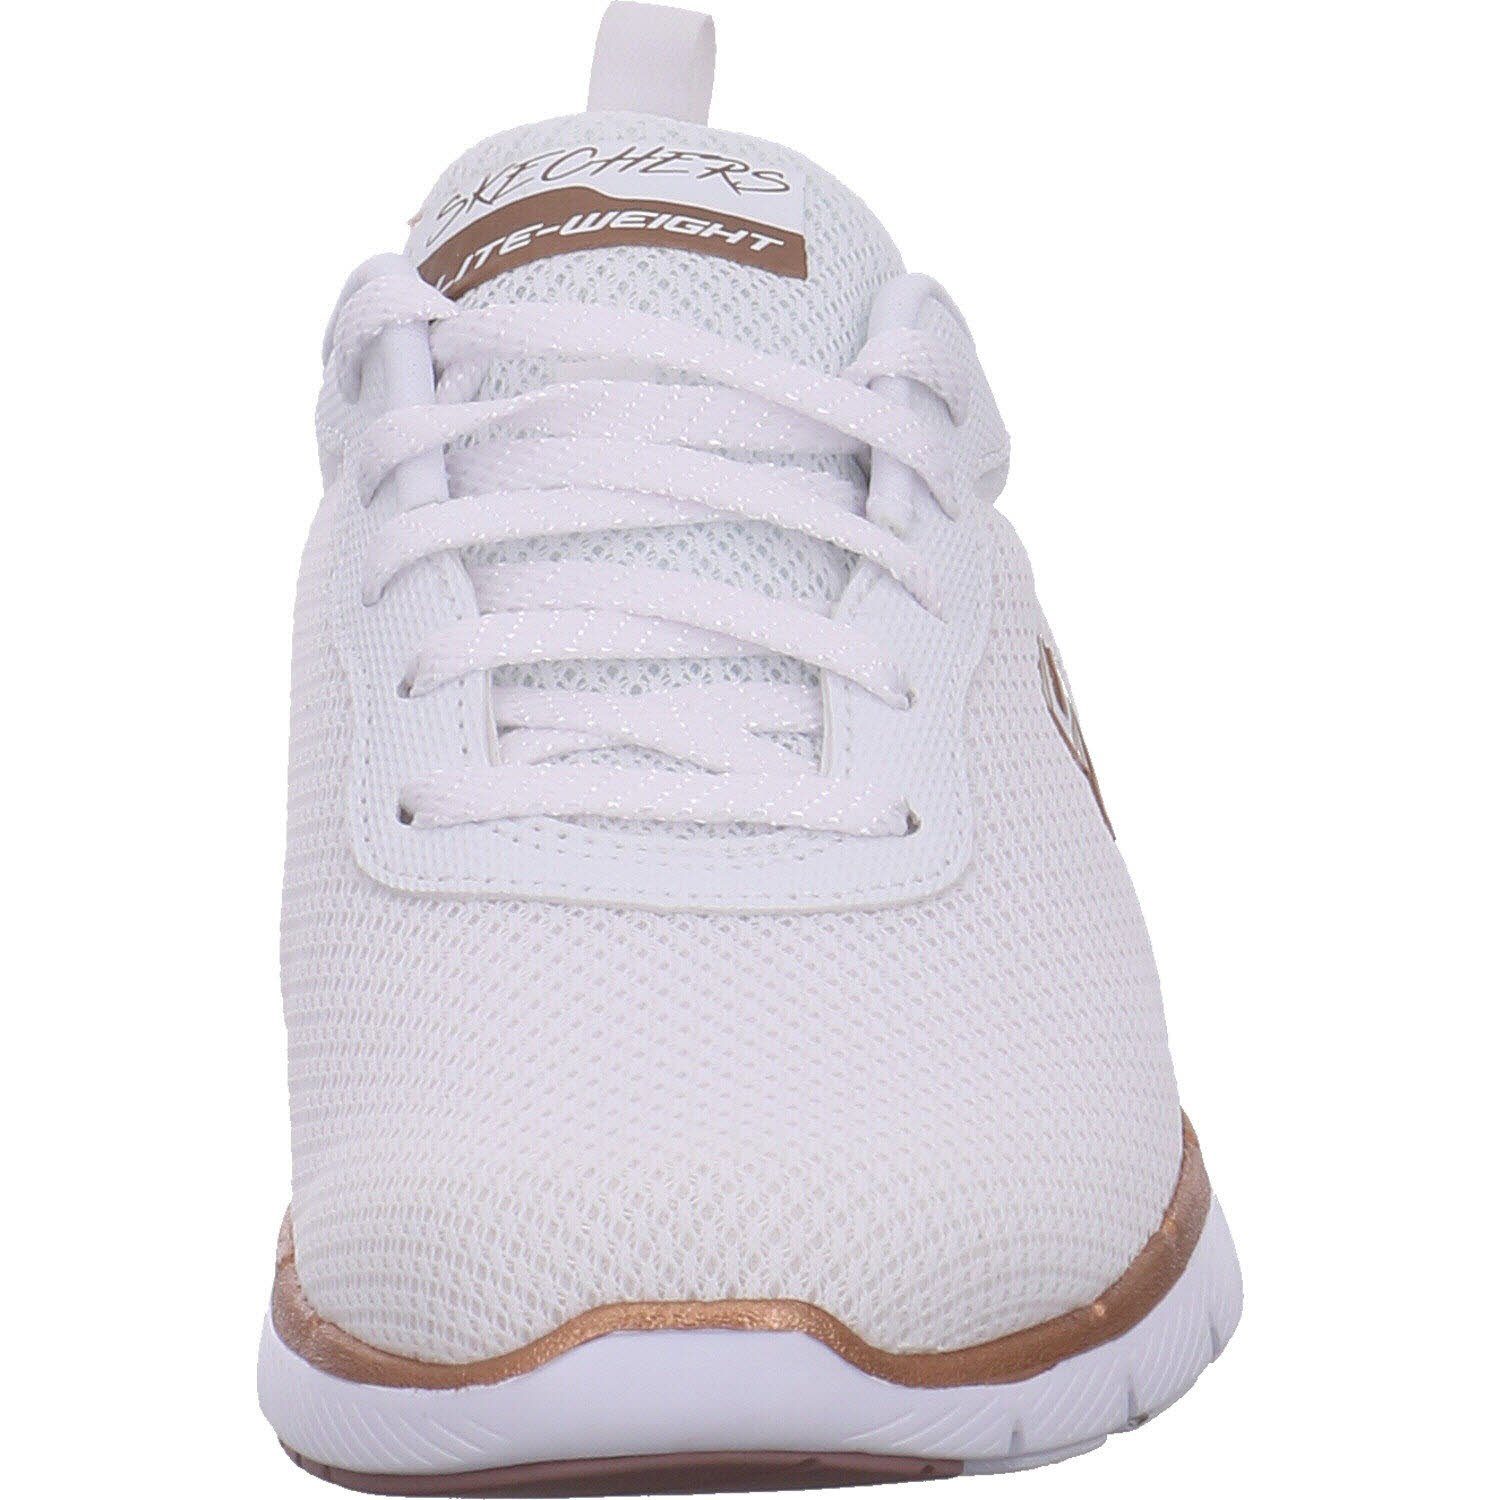 Skechers Flex Appeal First Sneaker Insight gold white/rose 3.0